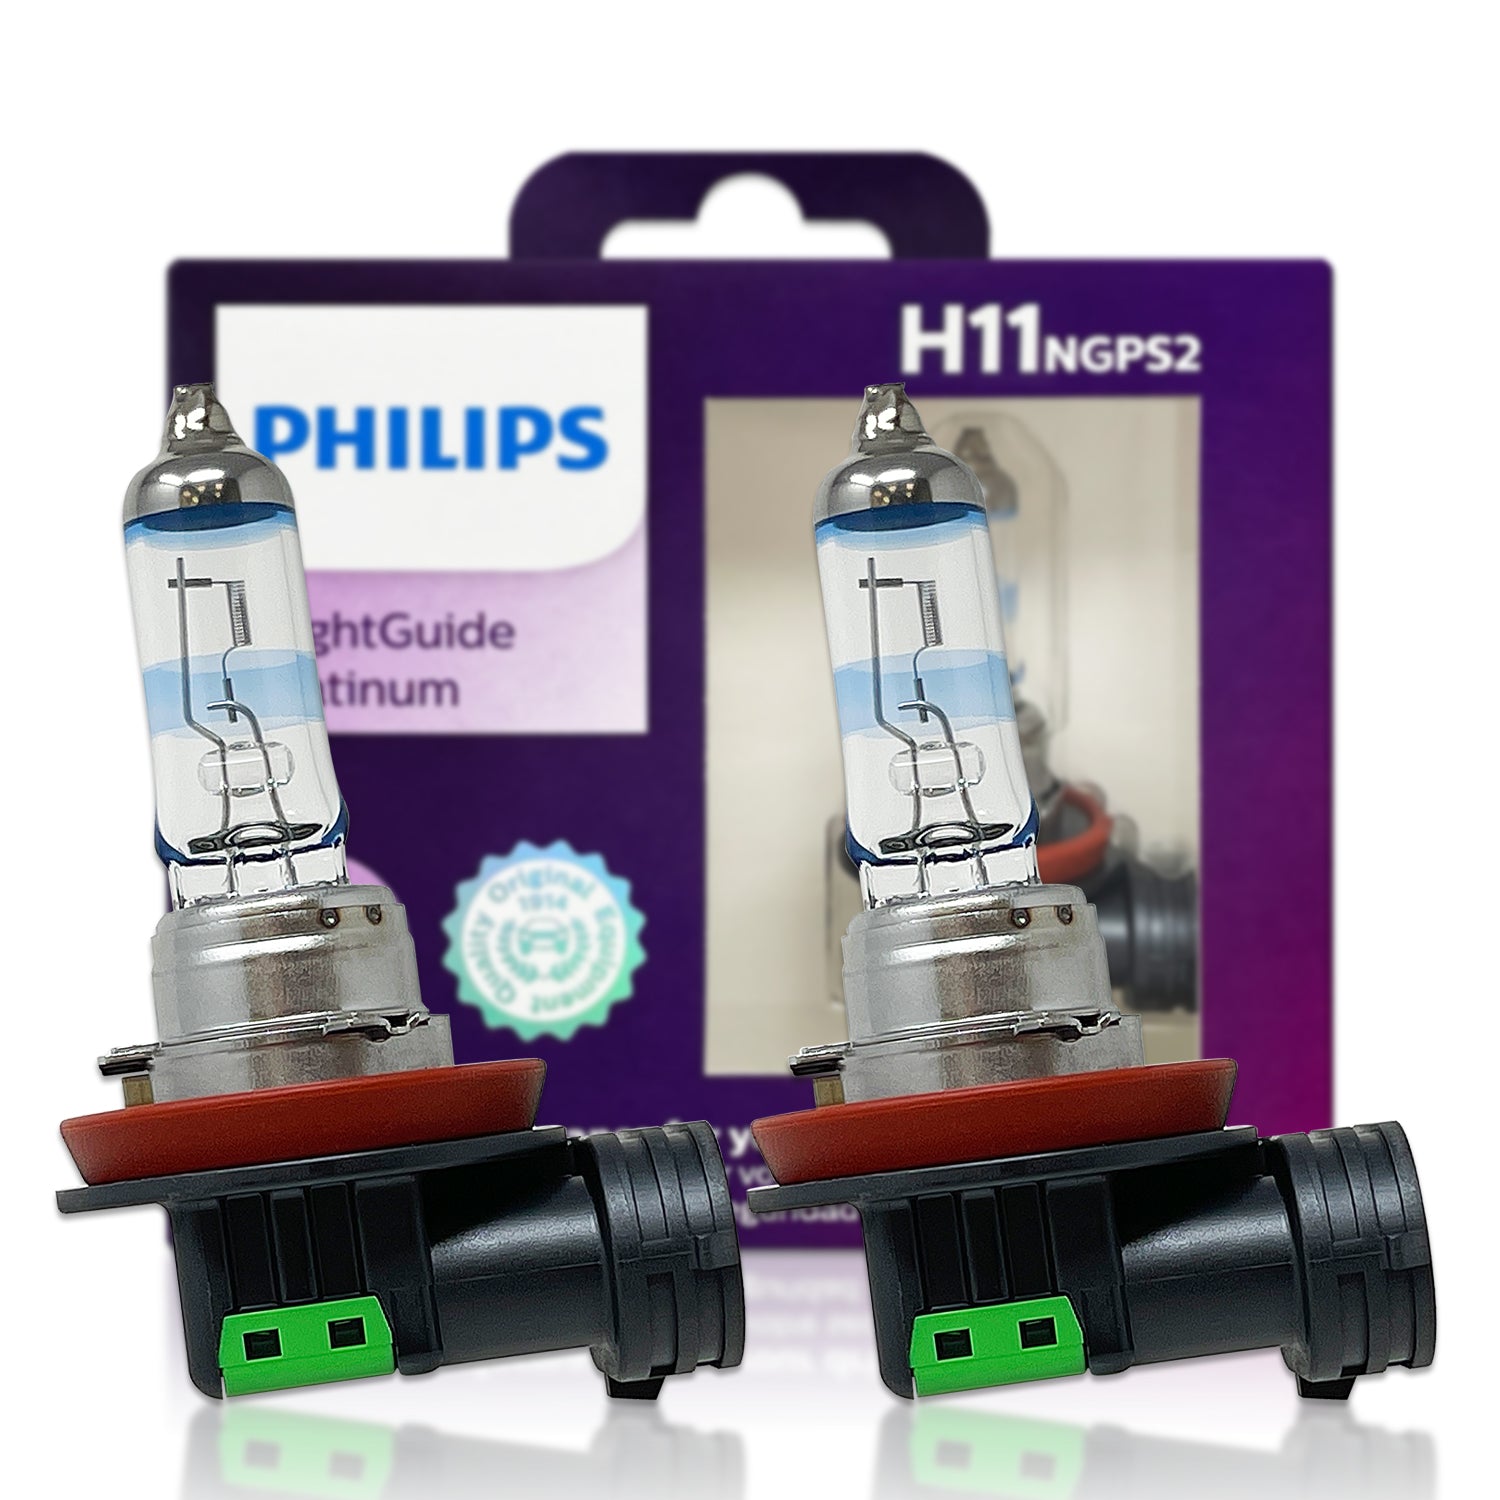 Philips NightGuide Platinum H11NGPS2